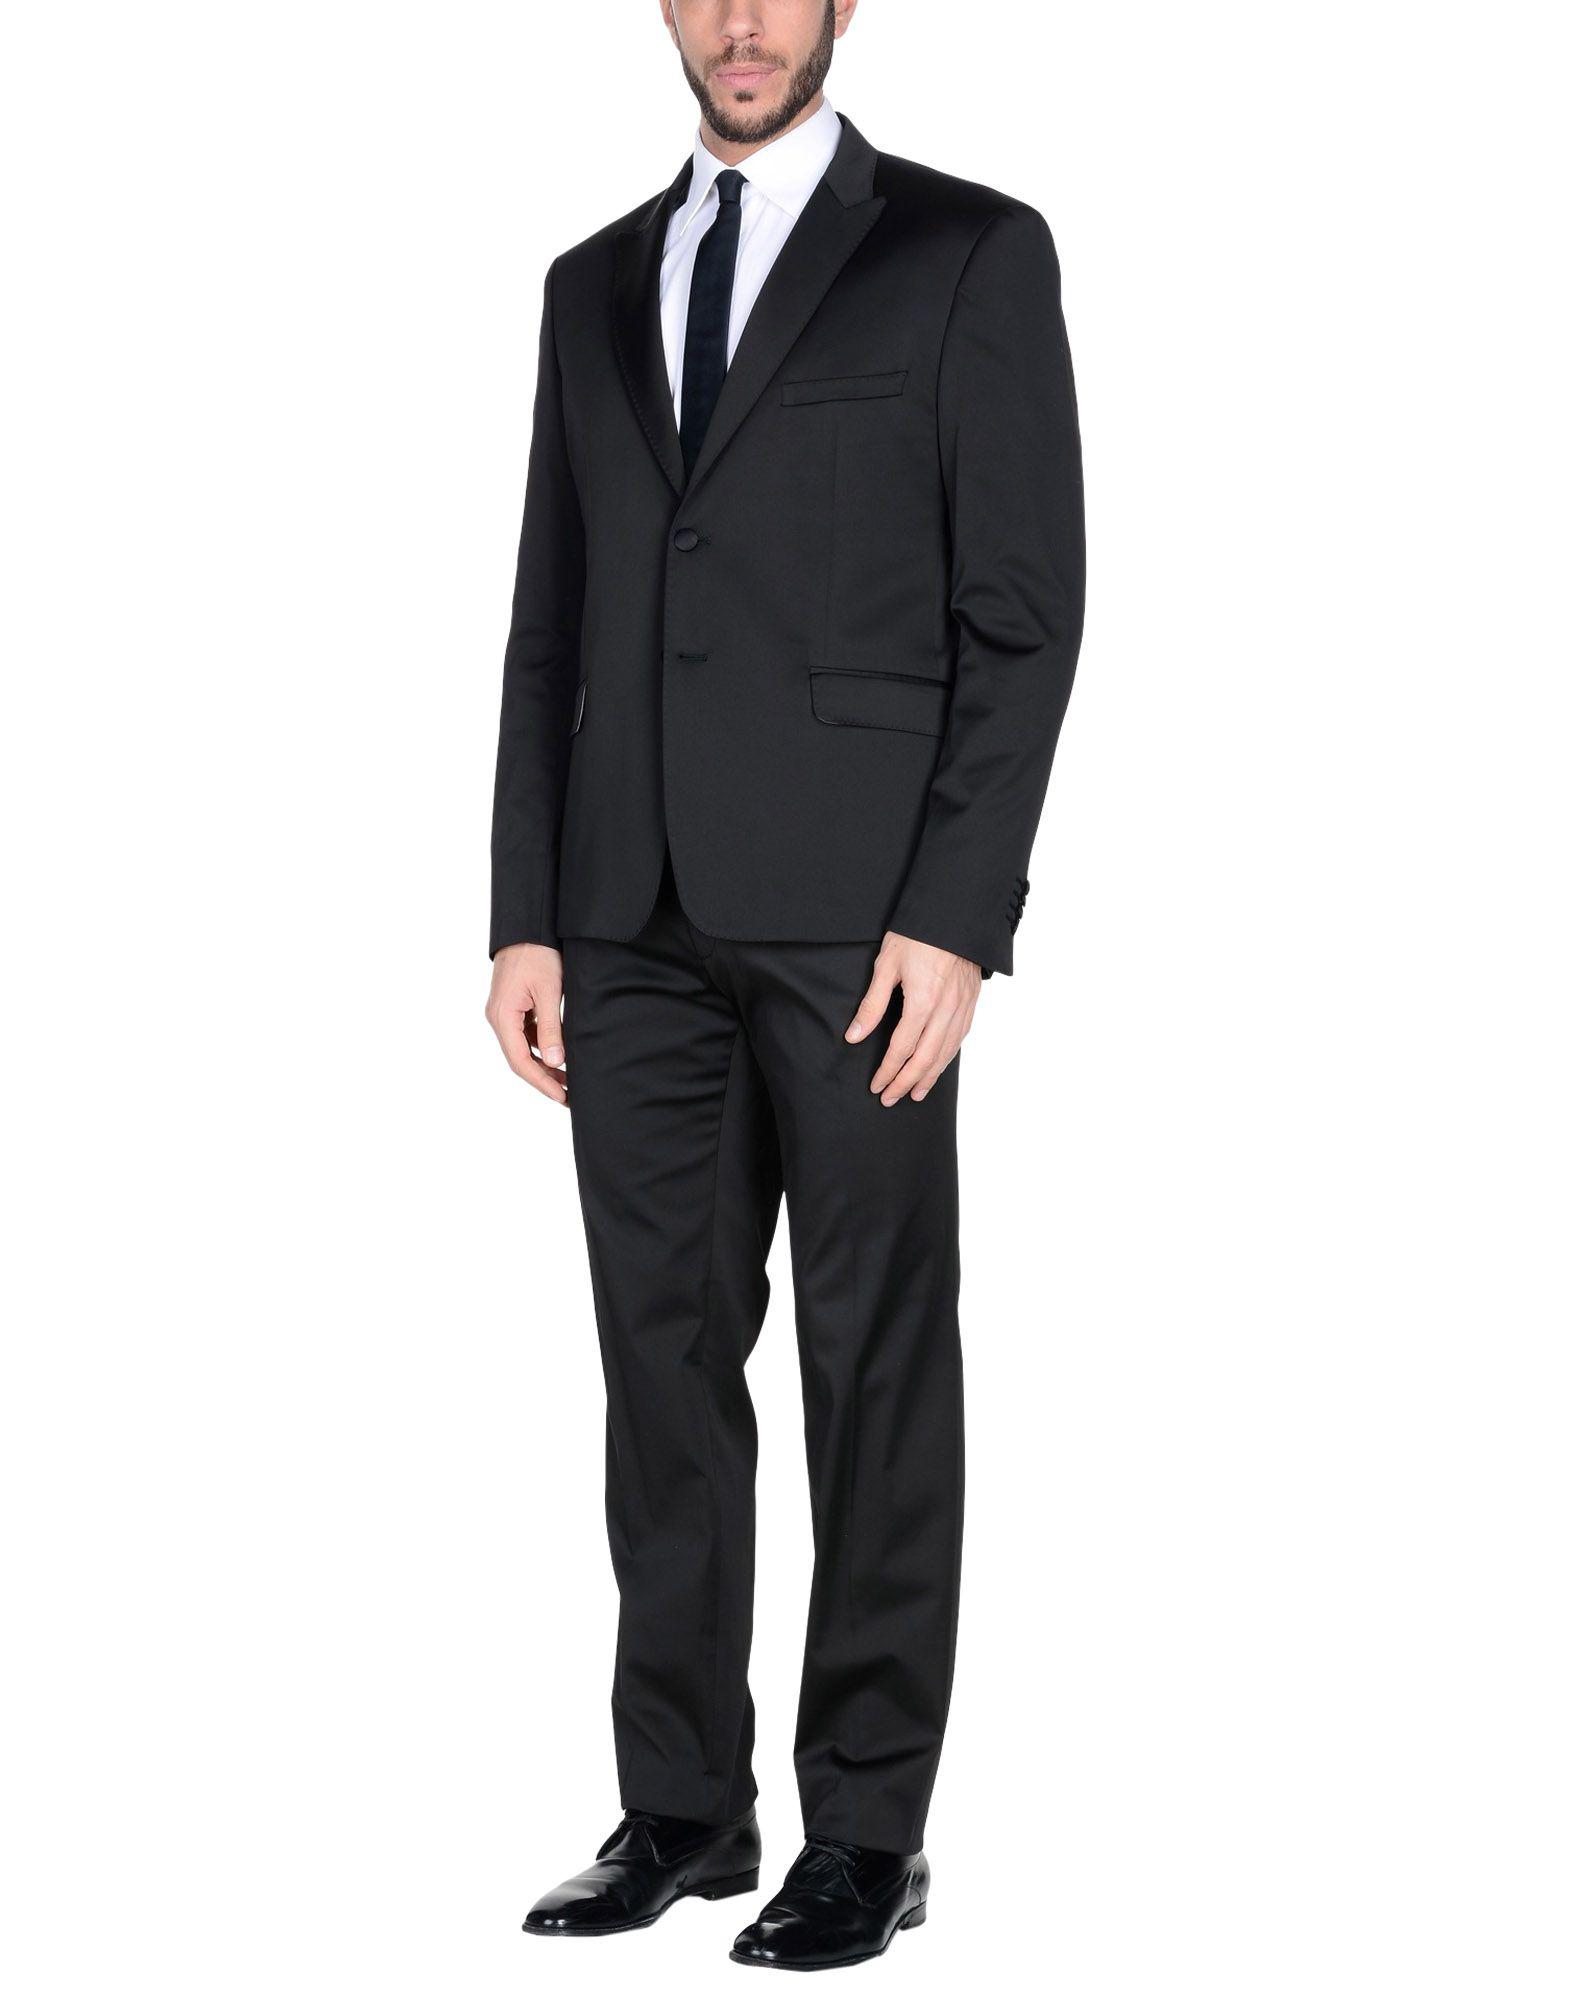 Roberto Pepe Satin Suit in Black for Men - Lyst